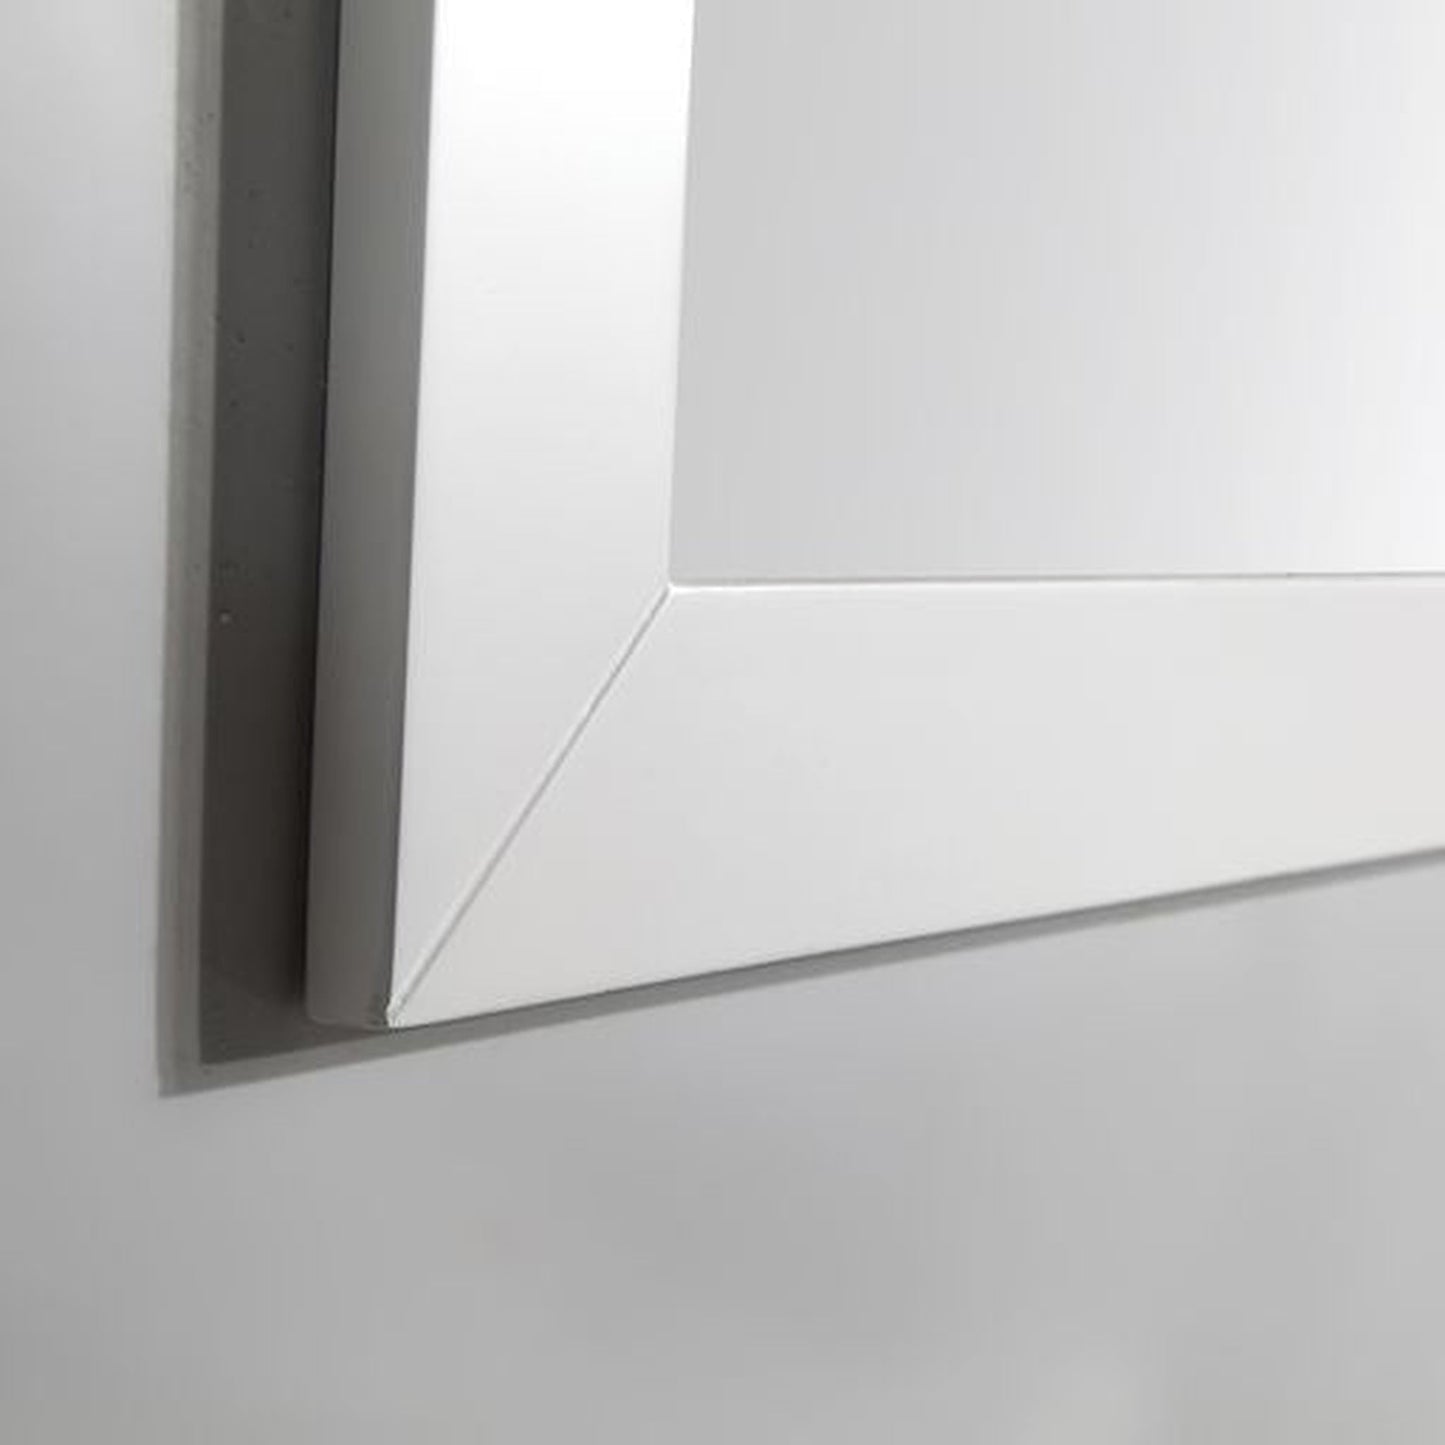 Vanity Art Savona 48" Single White Freestanding Modern Bathroom Vanity Set With Carrara Marble Top, Undermount Ceramic Sink, 7 Dovetail Drawer Cabinet, Backsplash and Mirror